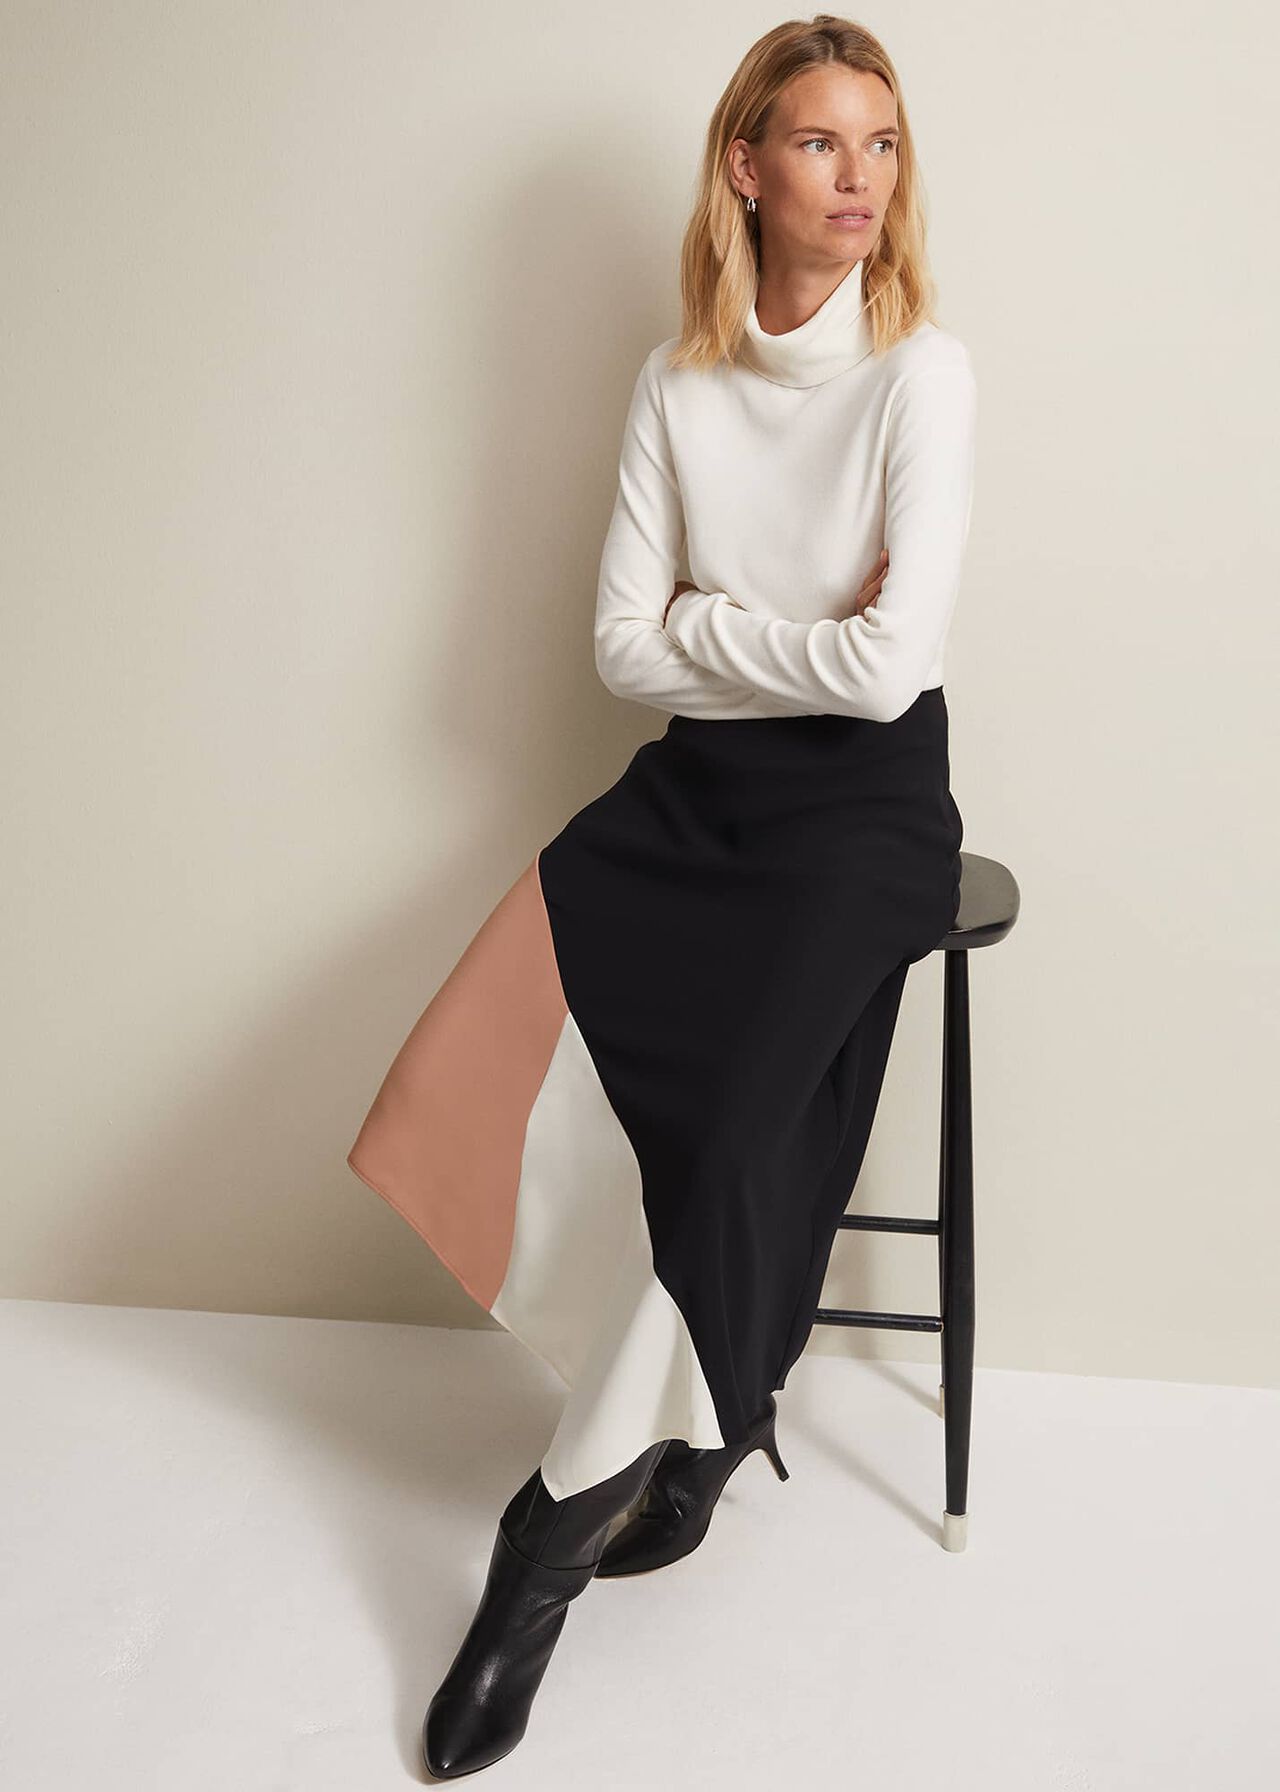 Zelaina Asymmetric Midi Skirt